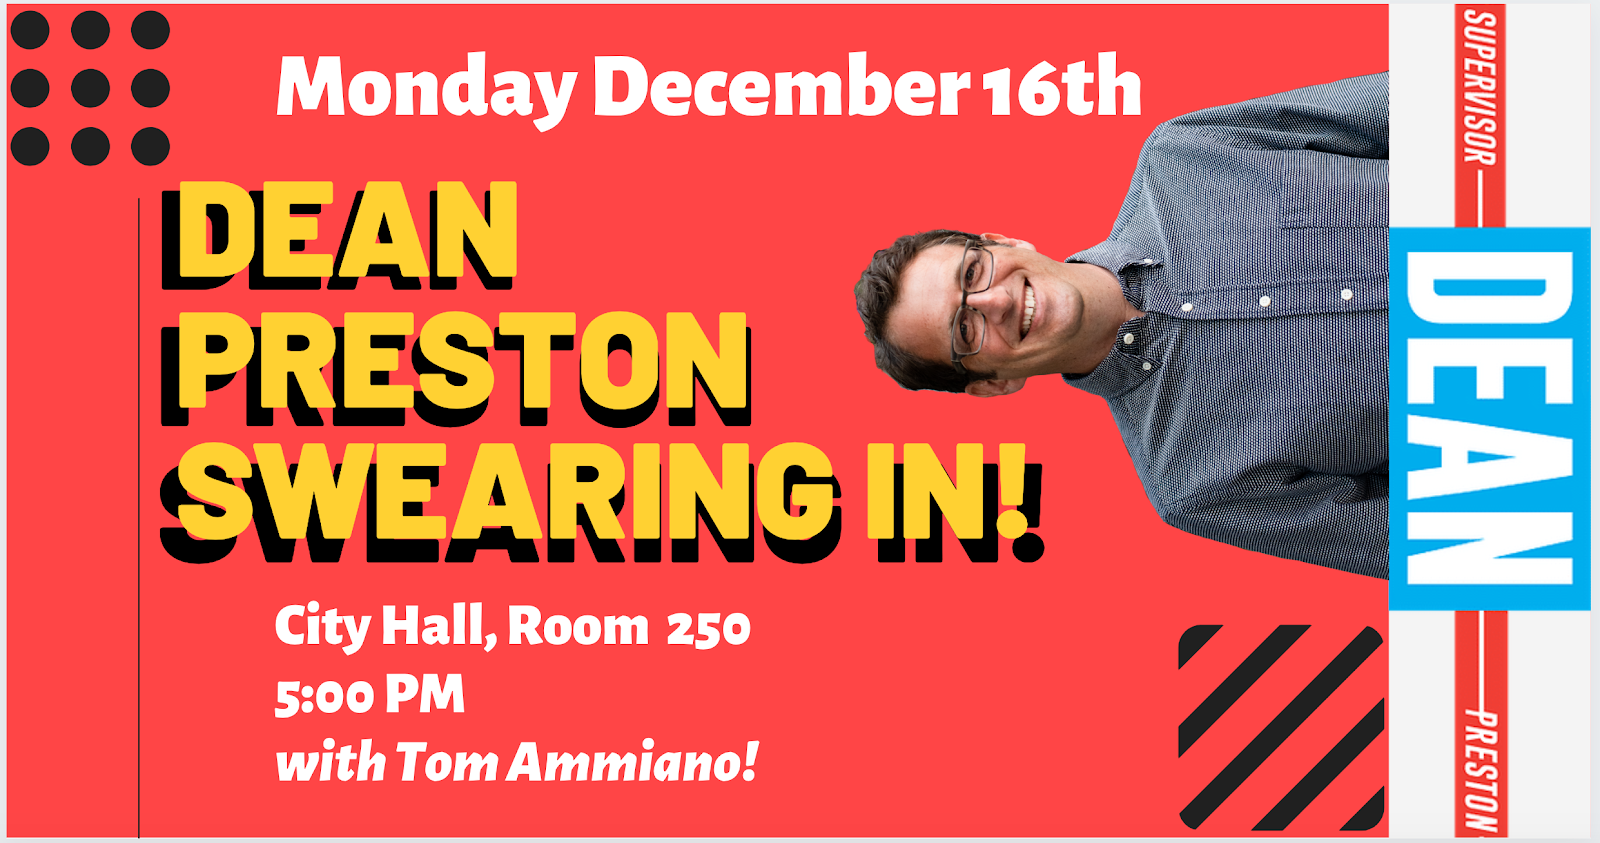 Dean Preston Swearing In! @ City Hall, Room 250